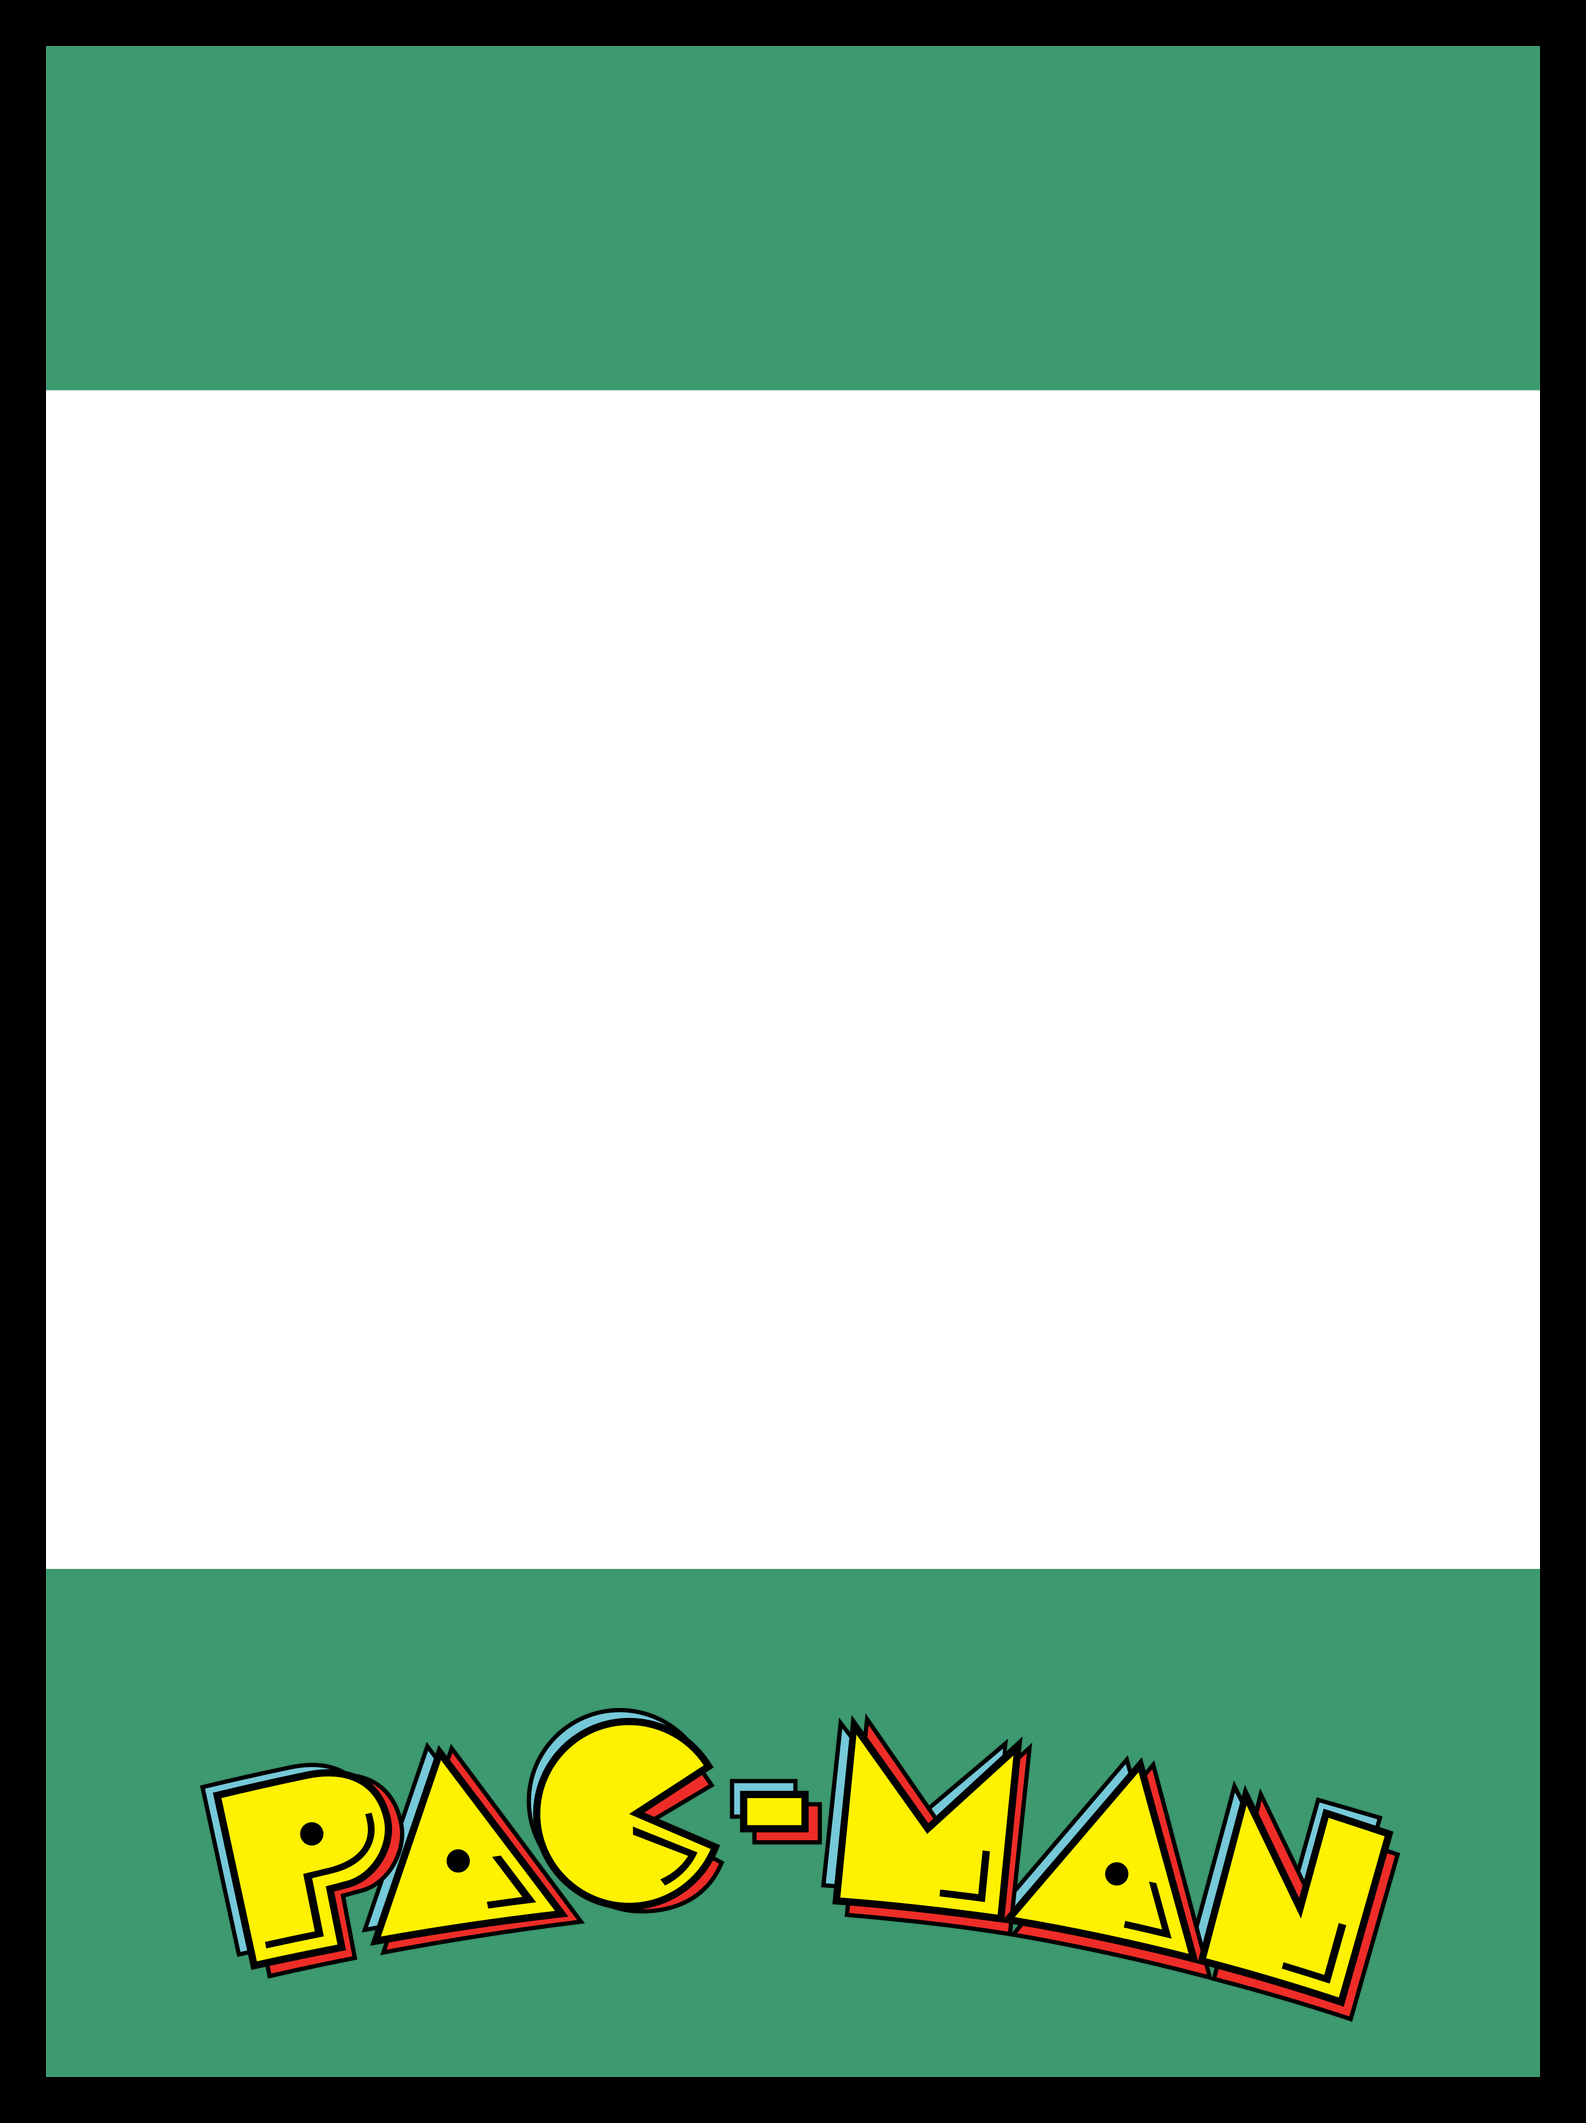 High Quality Pac-man oc character card Blank Meme Template